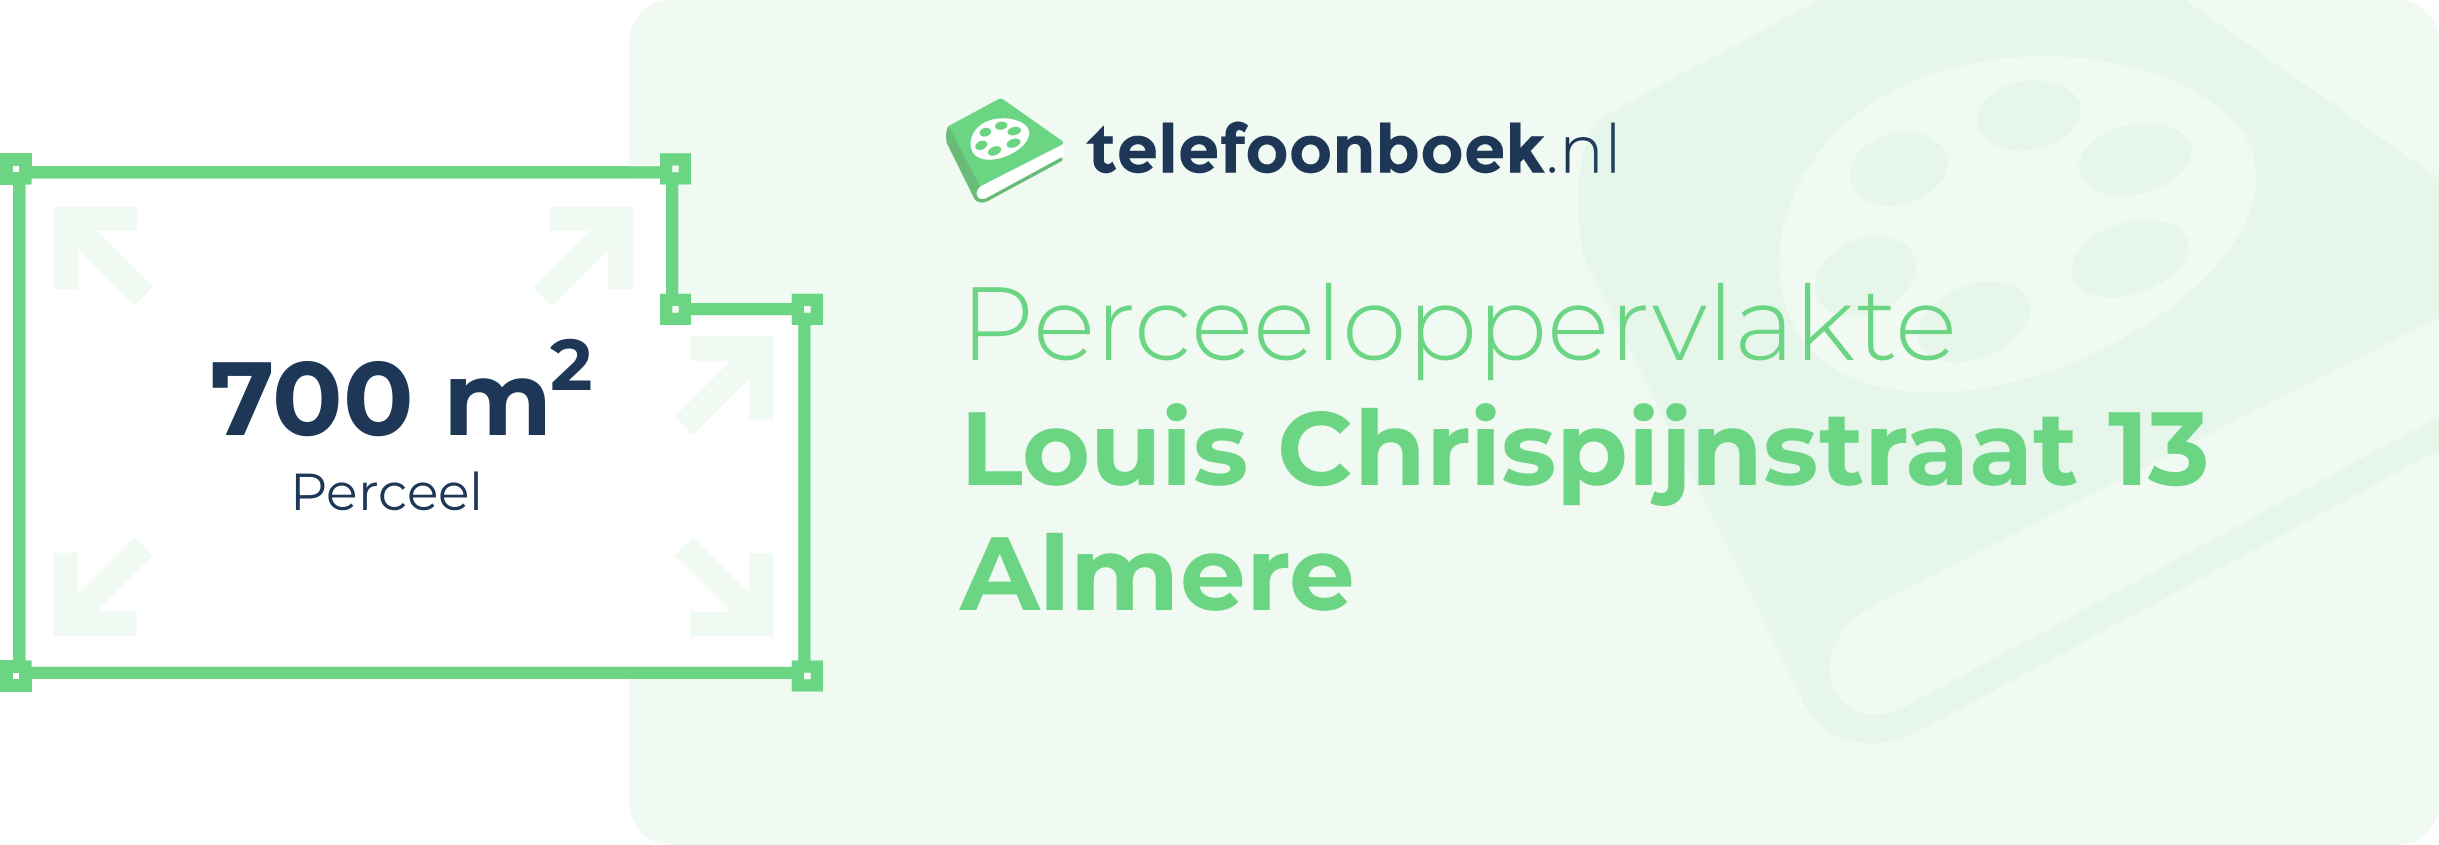 Perceeloppervlakte Louis Chrispijnstraat 13 Almere